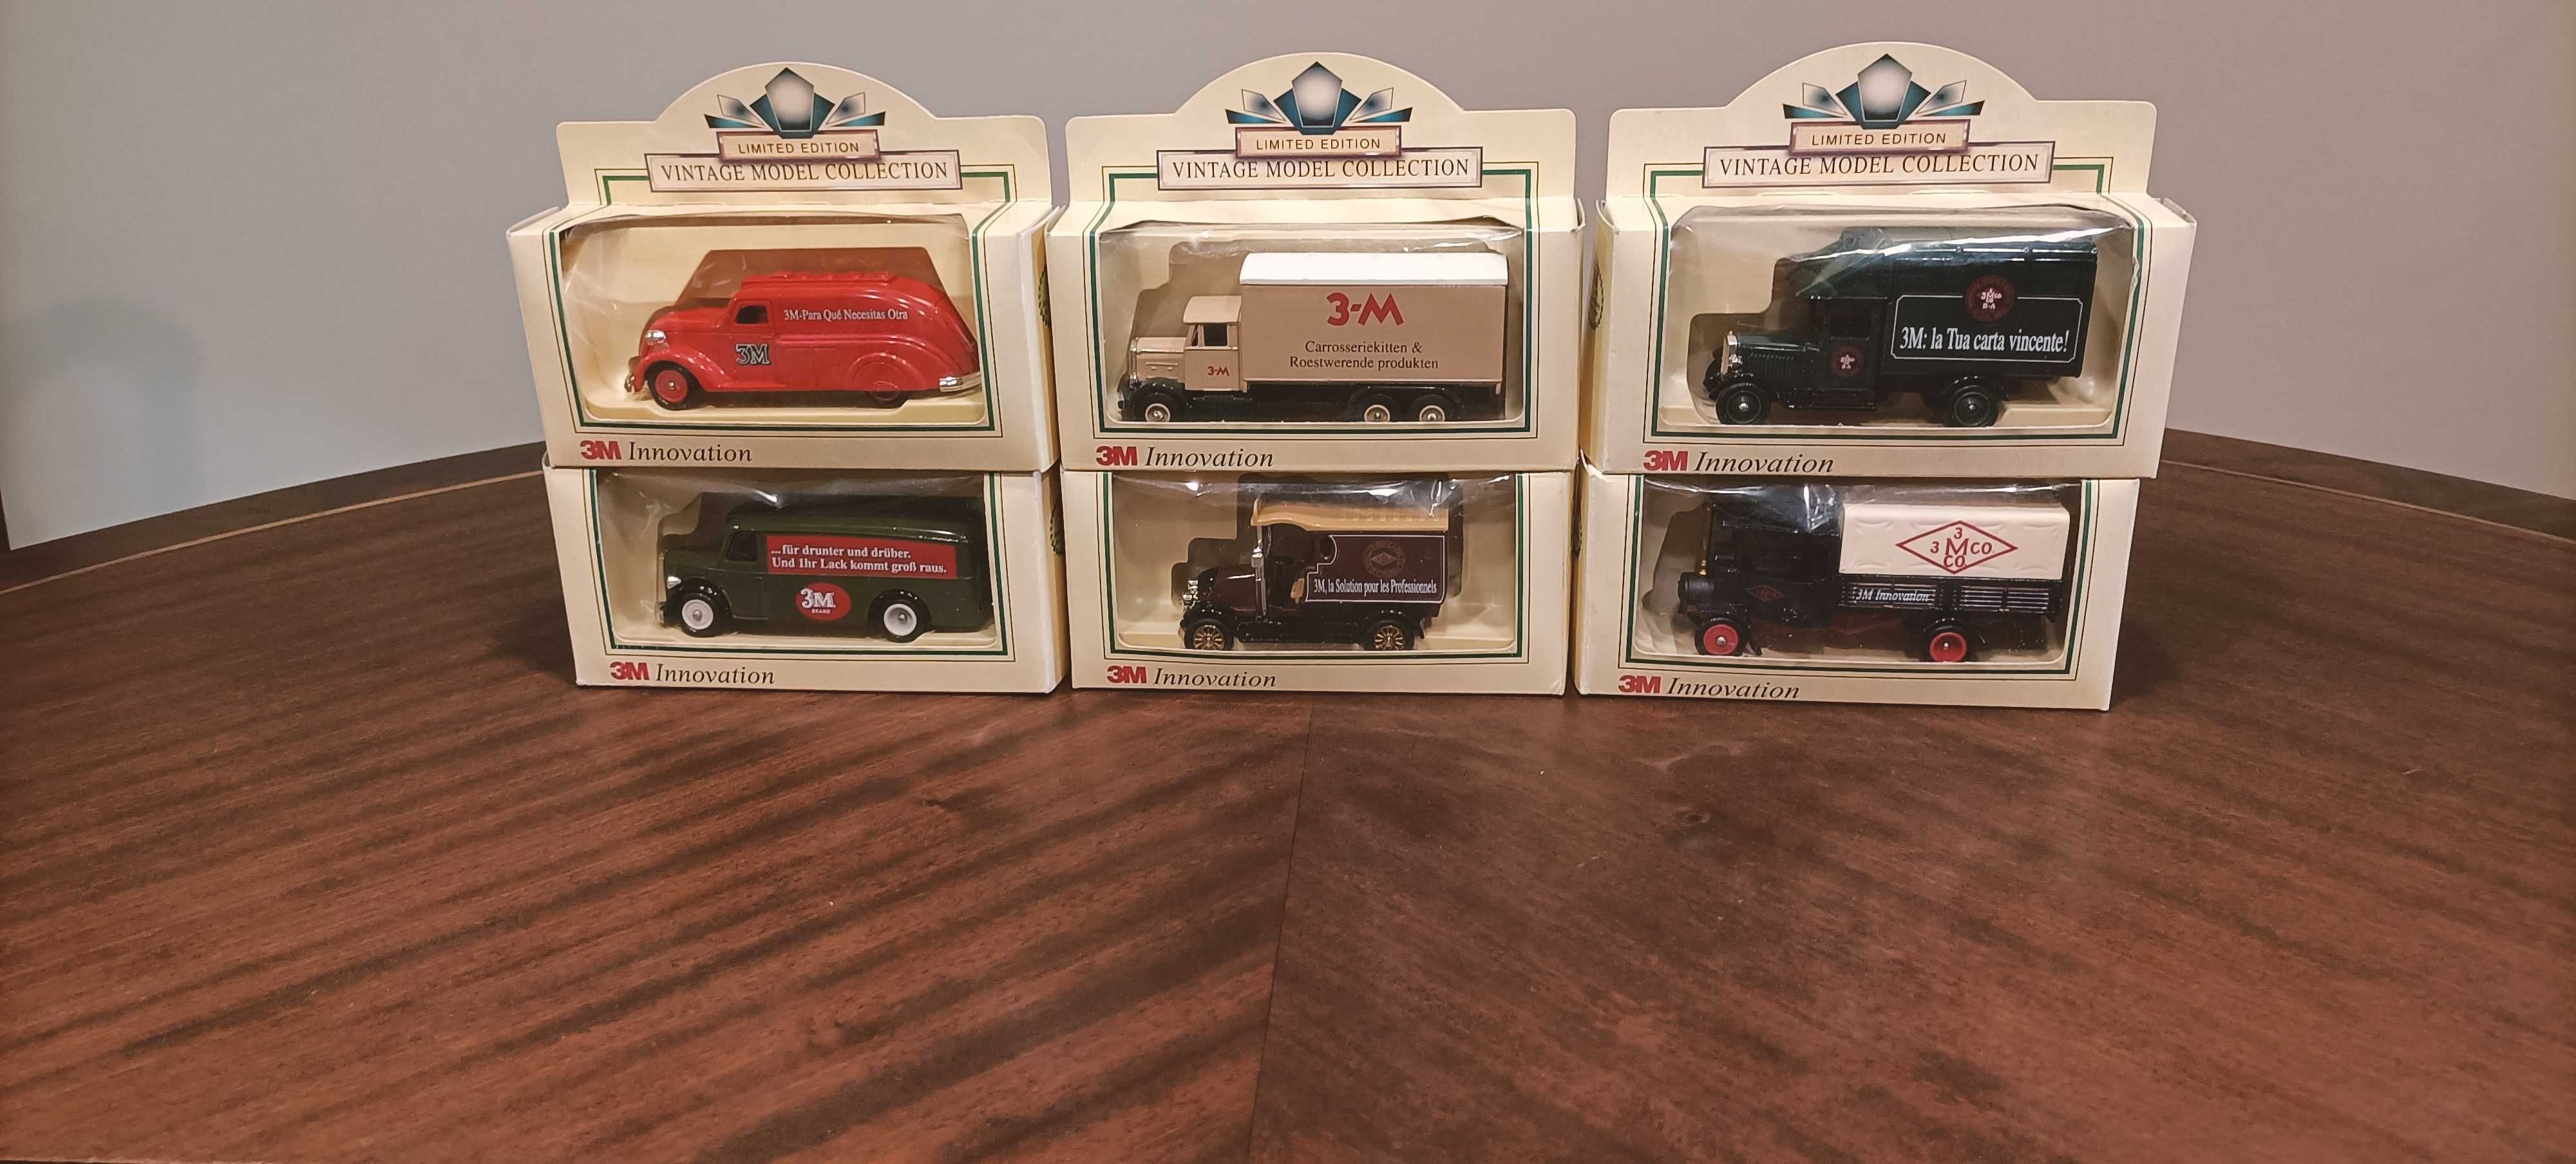 Miniaturas Vintage models 3M